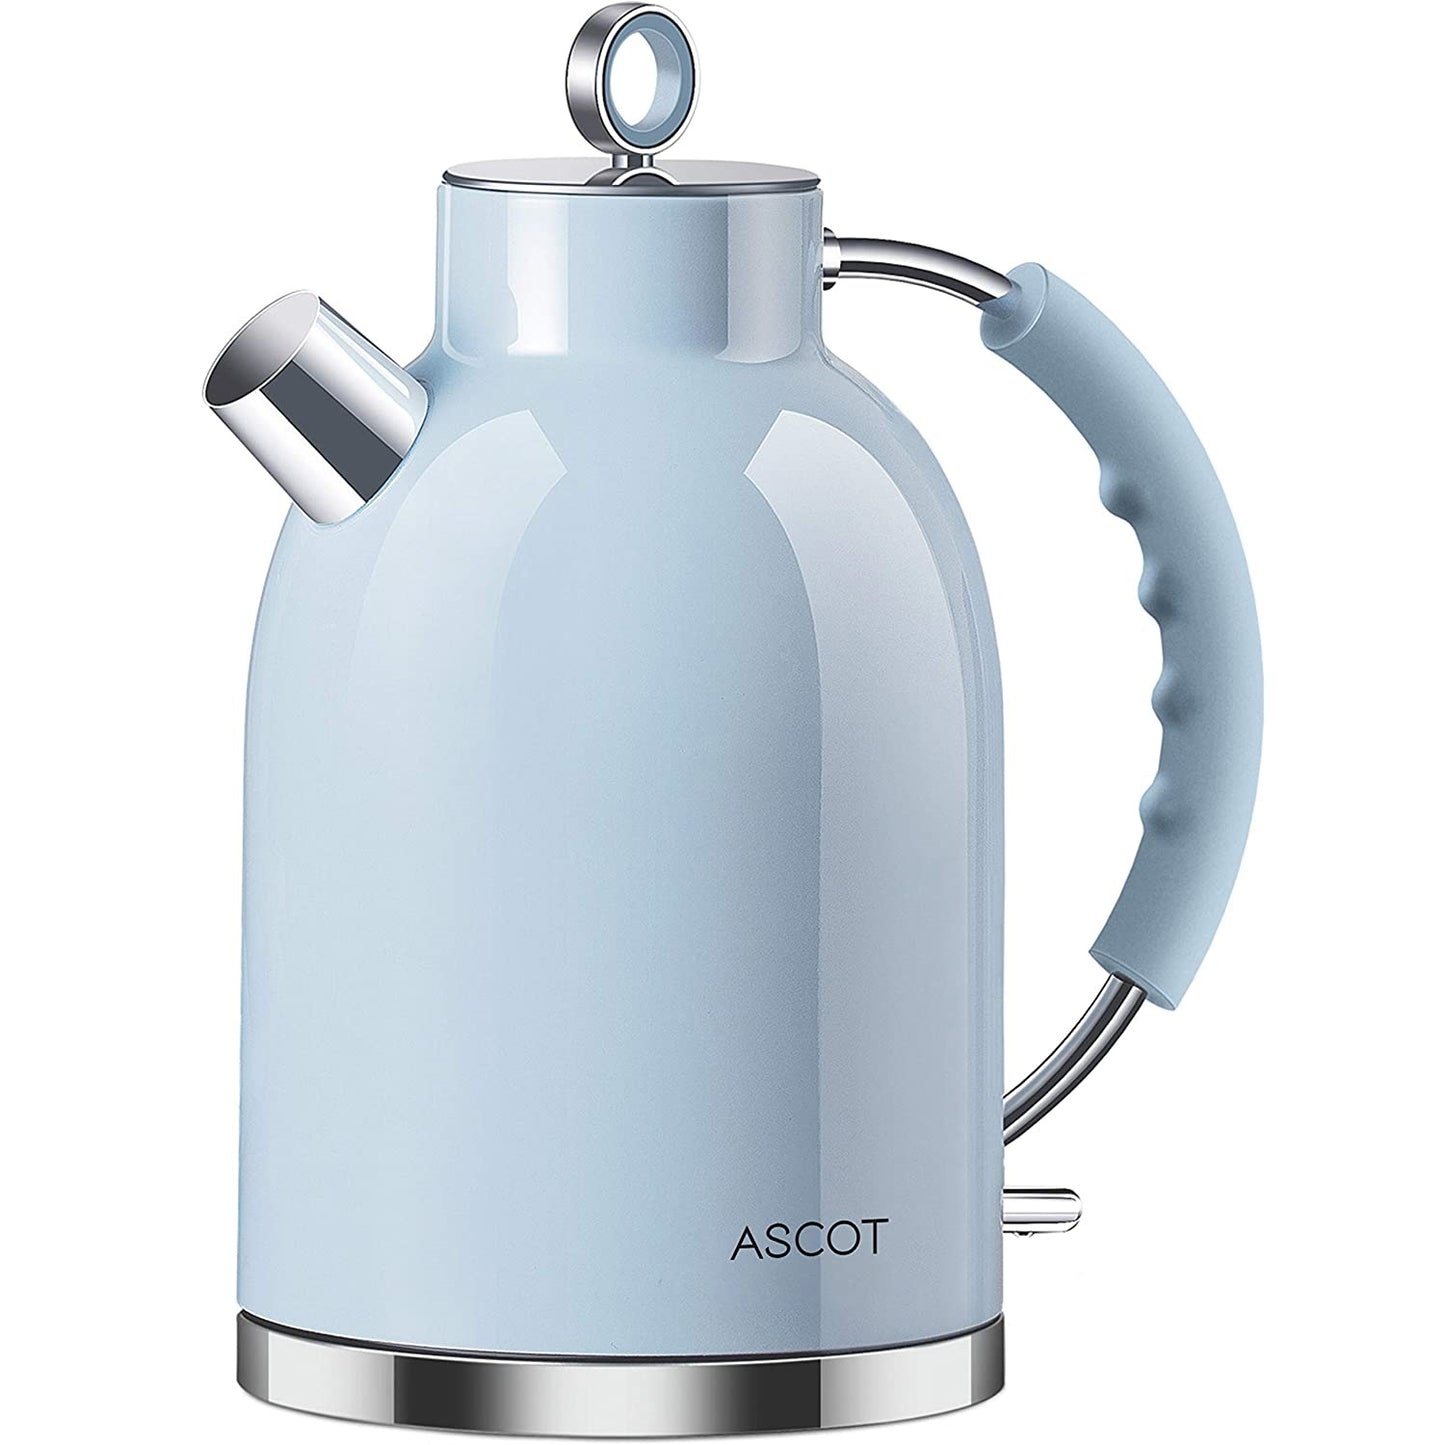 ASCOT Electric Kettle Stainless Steel Tea Kettle,1.6L(K1-Blue)